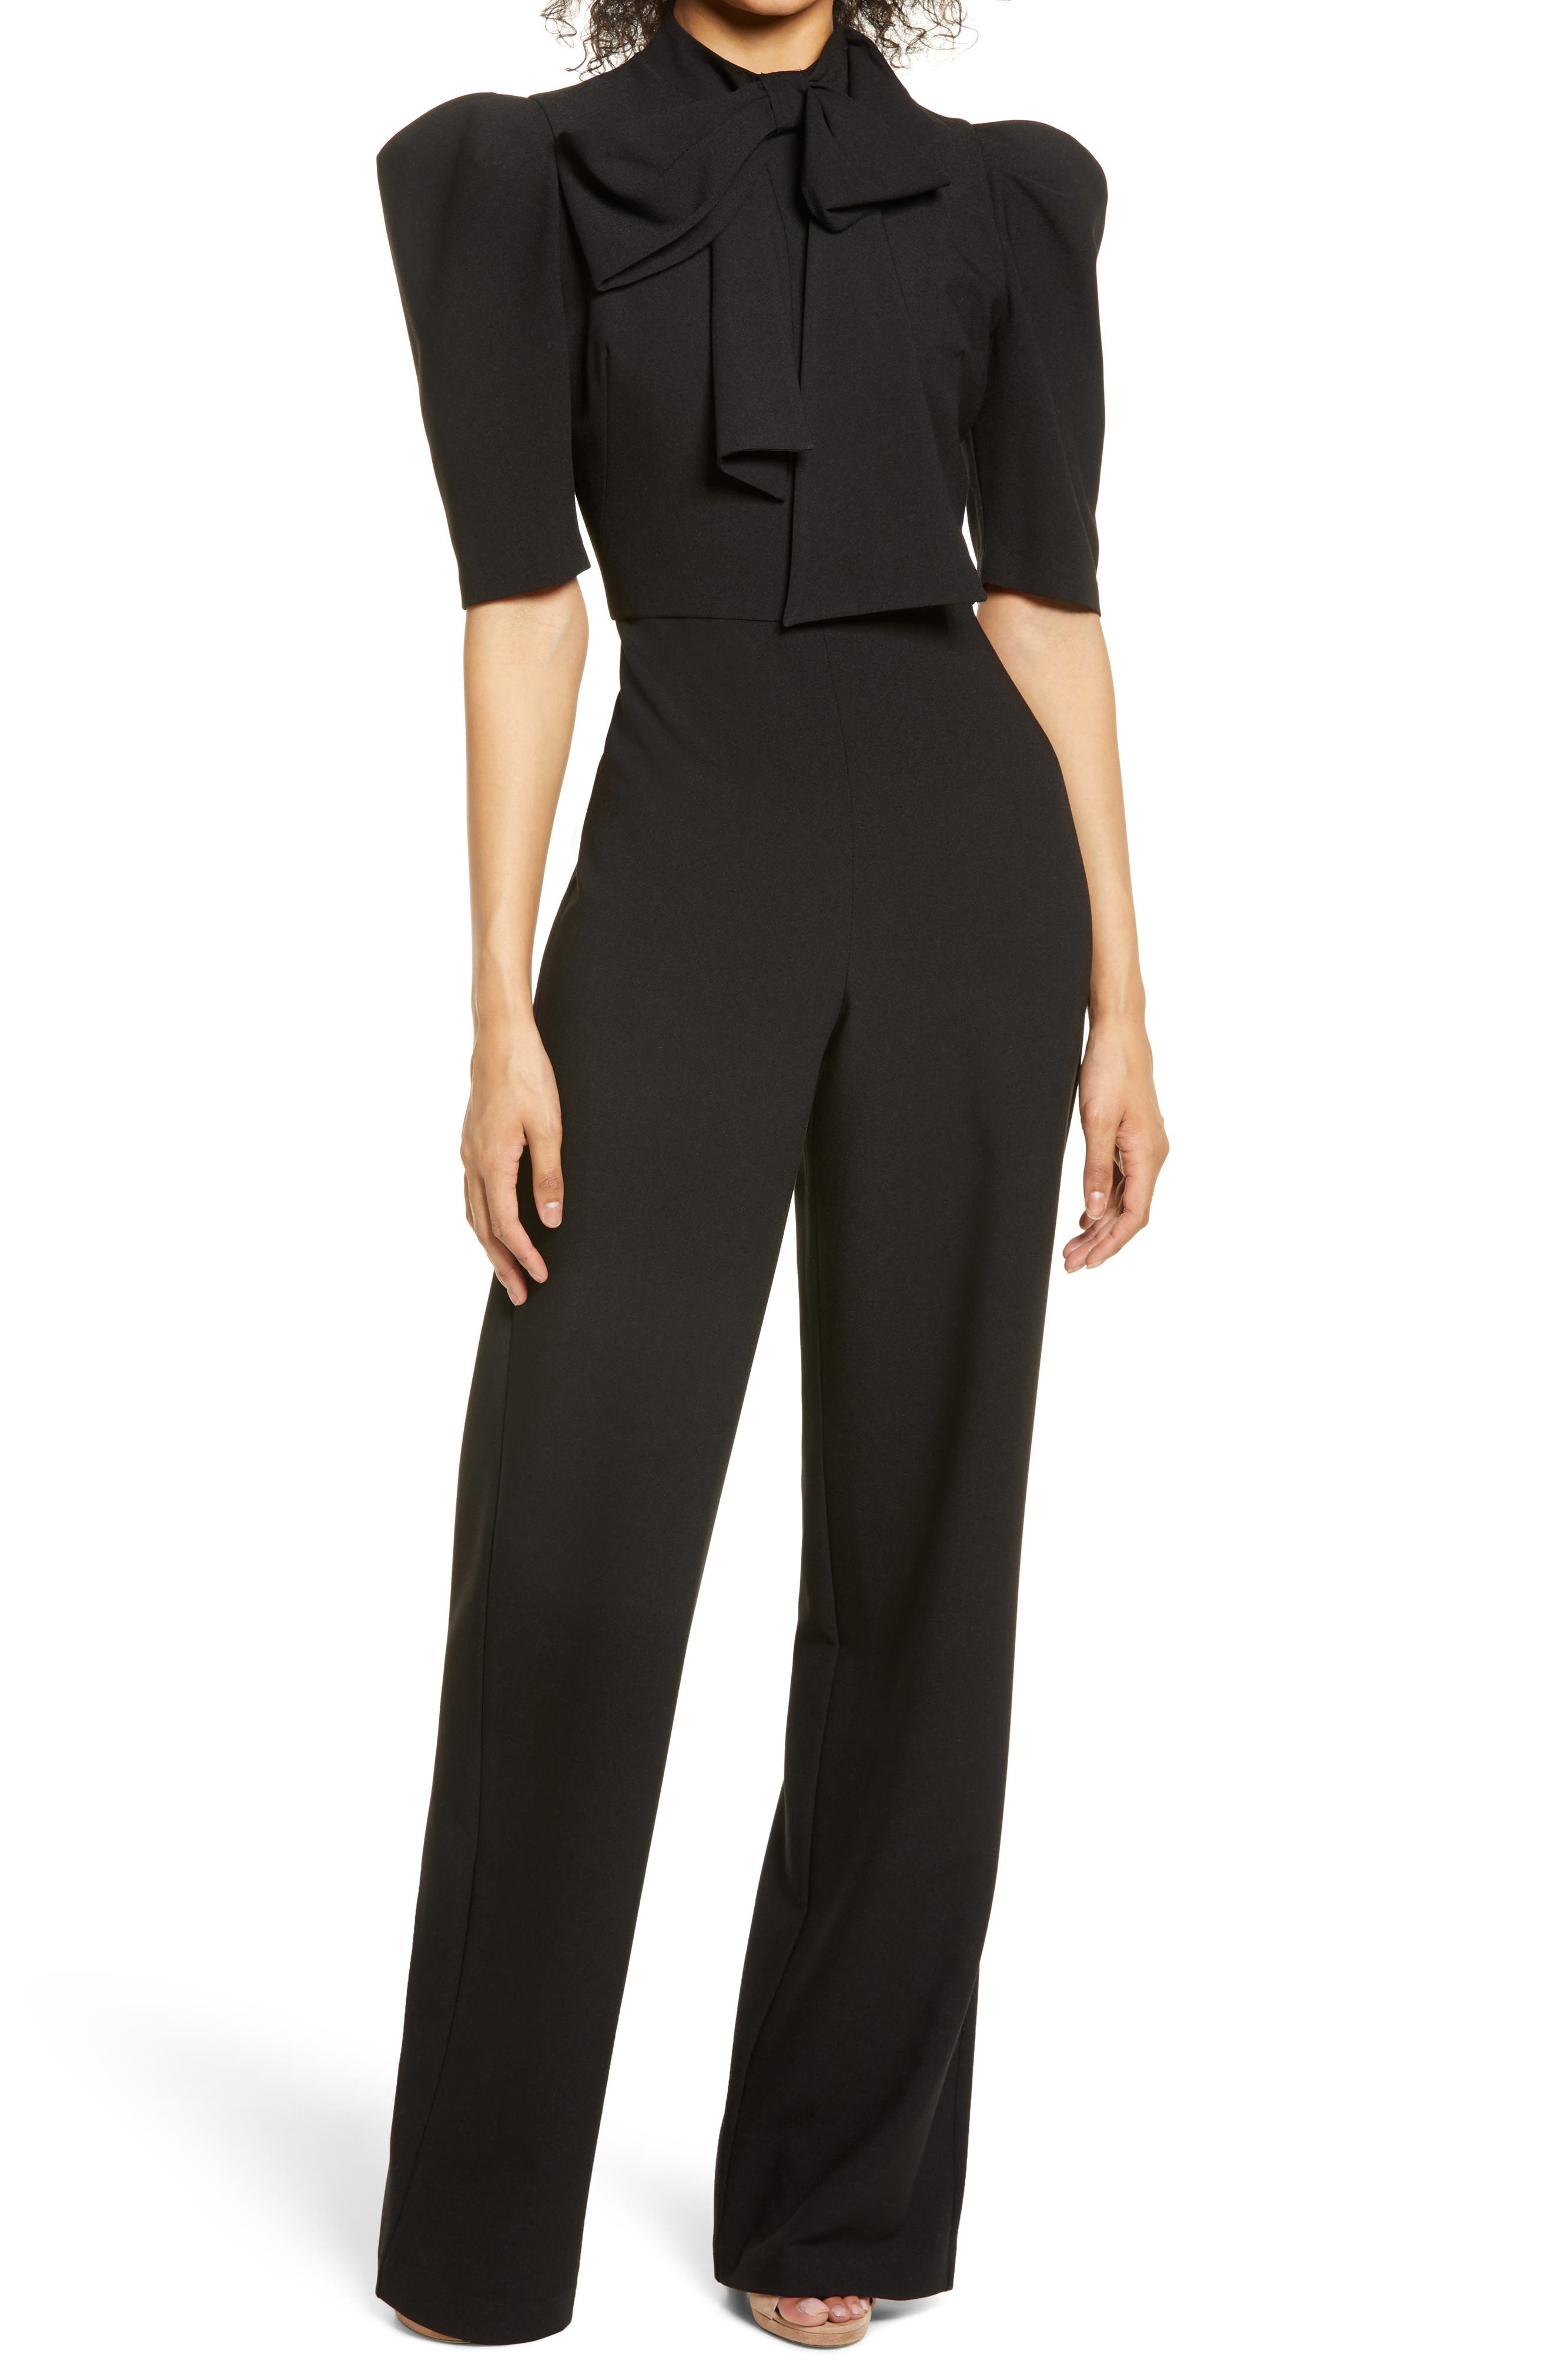 L Women Ladies Elegant Short Sleeve V-neck Jumpsuit BLACK M XL SHOP ONLINE